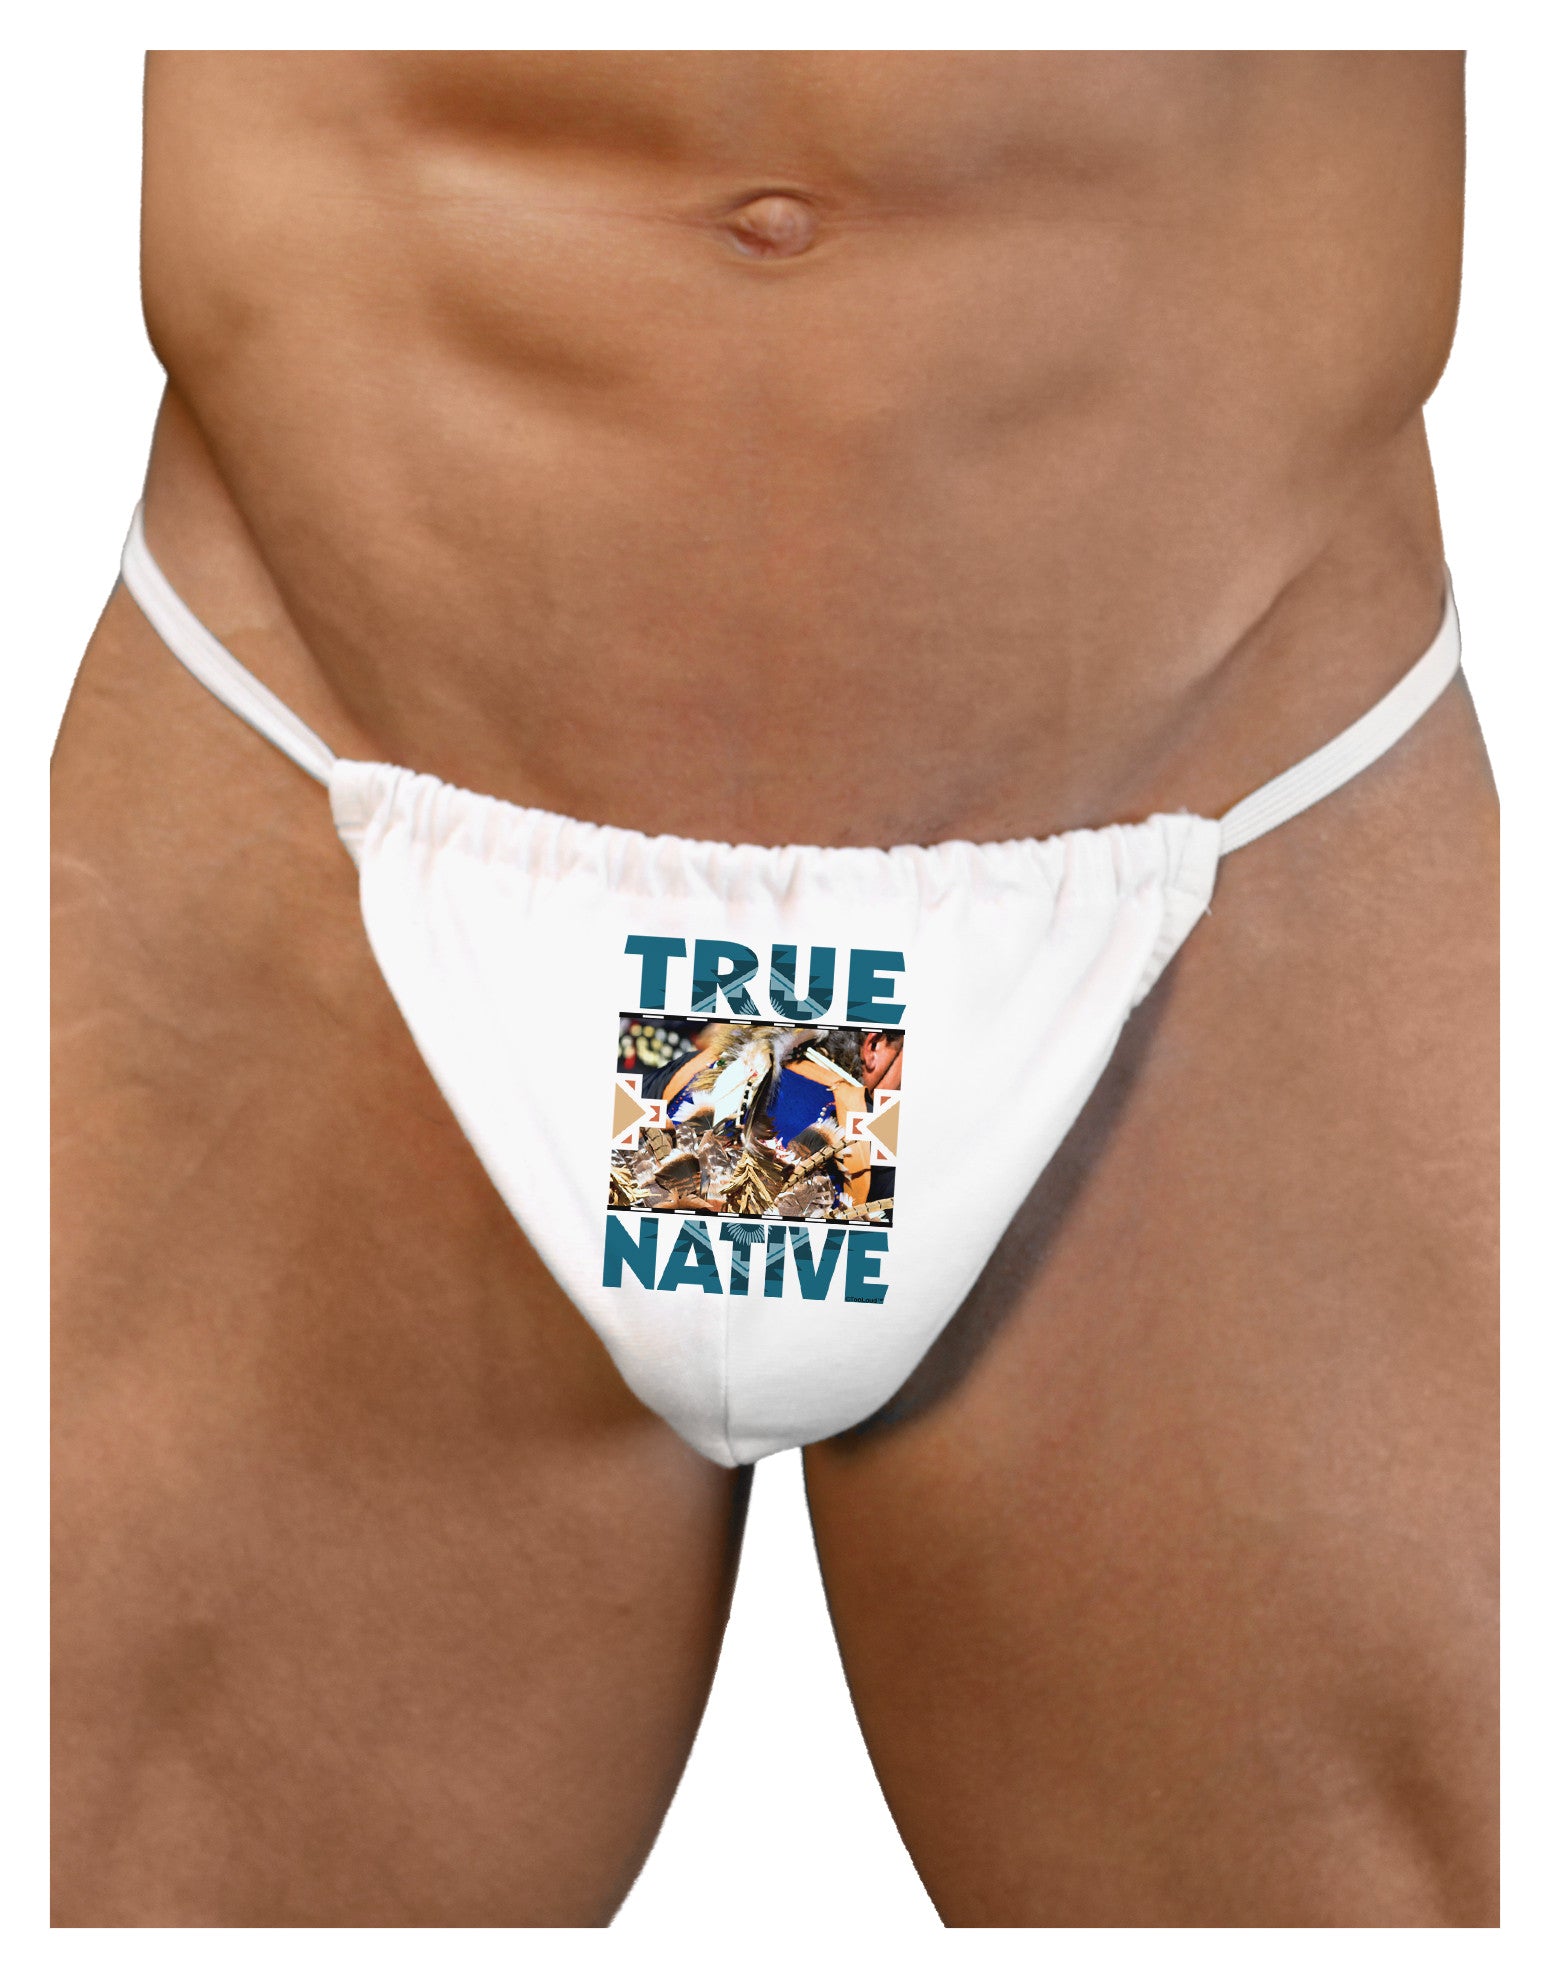 True Native American Mens NDS Wear Briefs Underwear